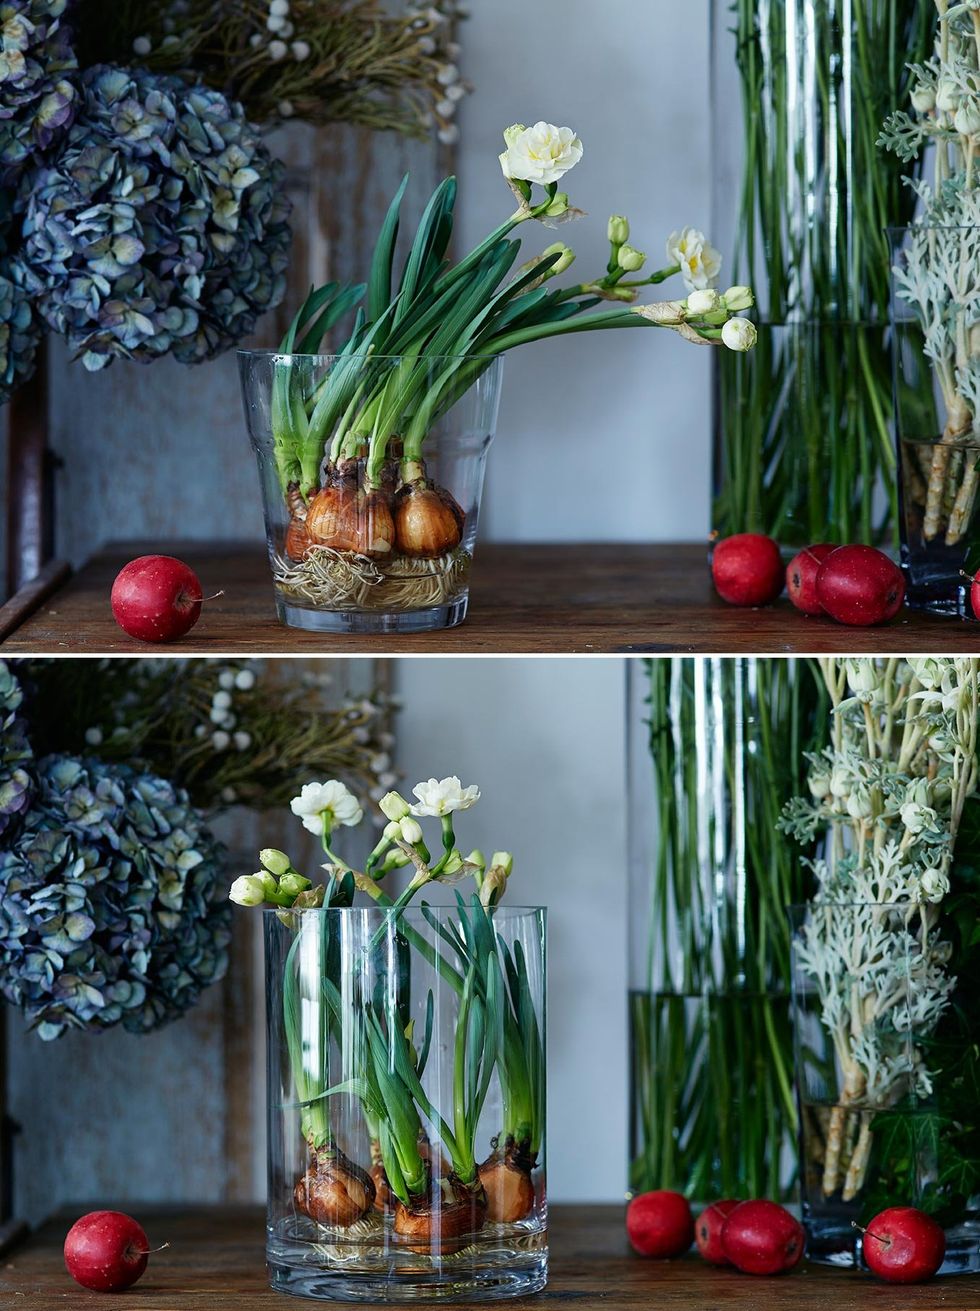 Interior design, Still life photography, Artifact, Flower Arranging, Vase, Floristry, Floral design, Ingredient, Produce, Flowering plant, 